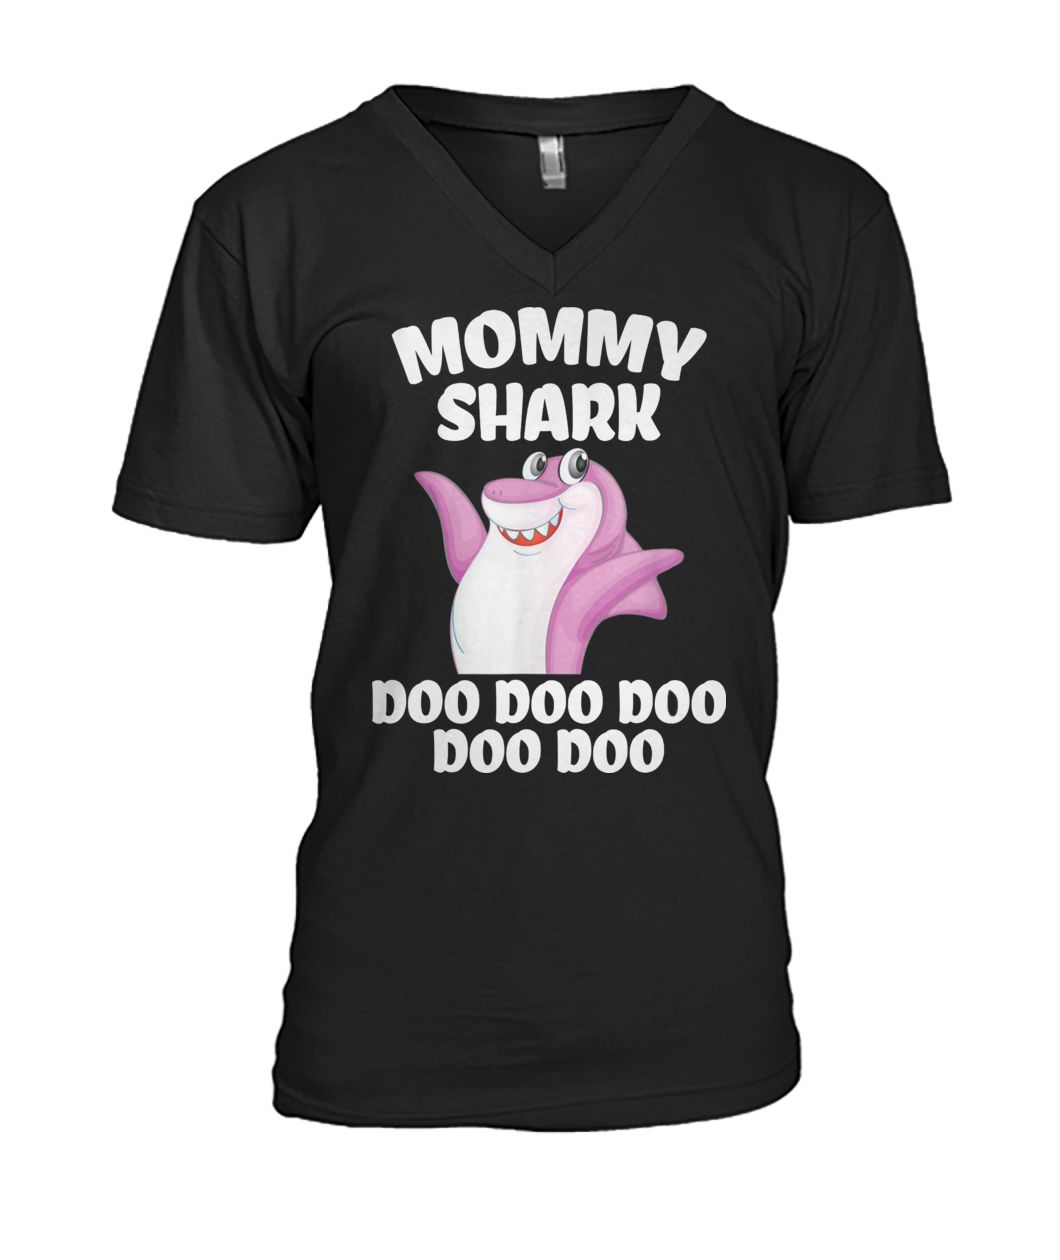 Mommy shark doo doo doo mother's day mens v-neck